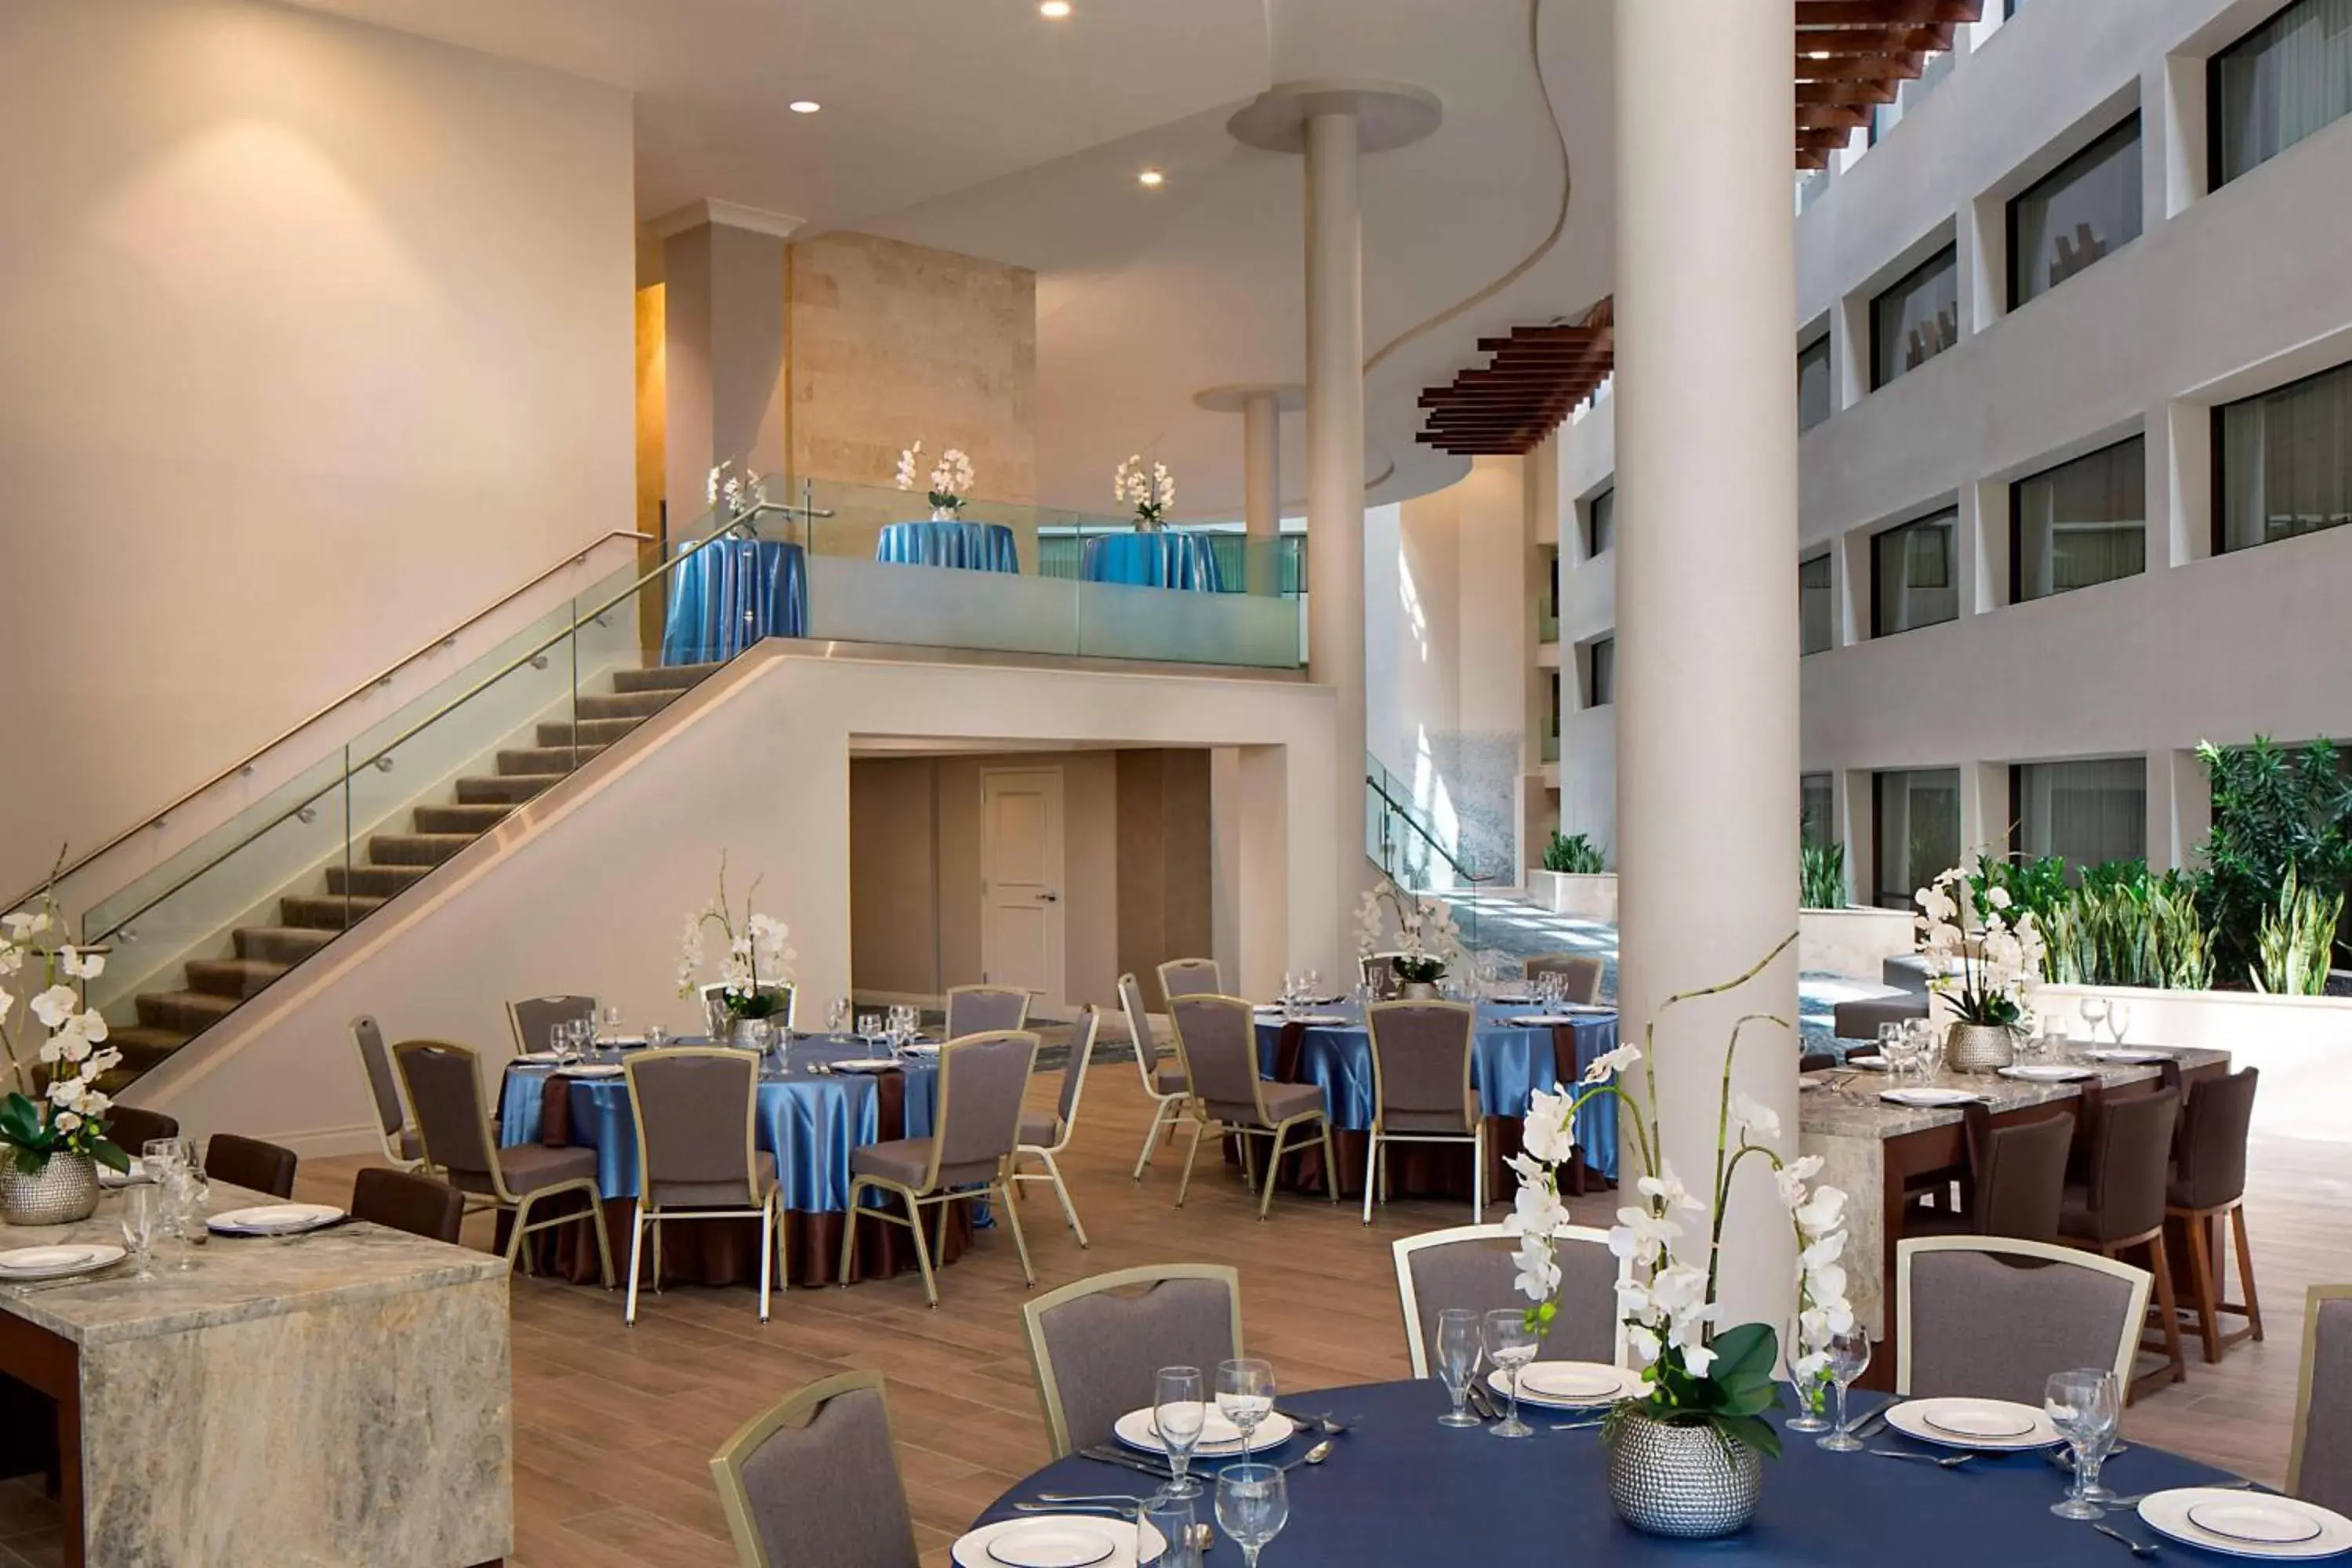 Meeting/conference room, Restaurant/Places to Eat in San Antonio Marriott Northwest